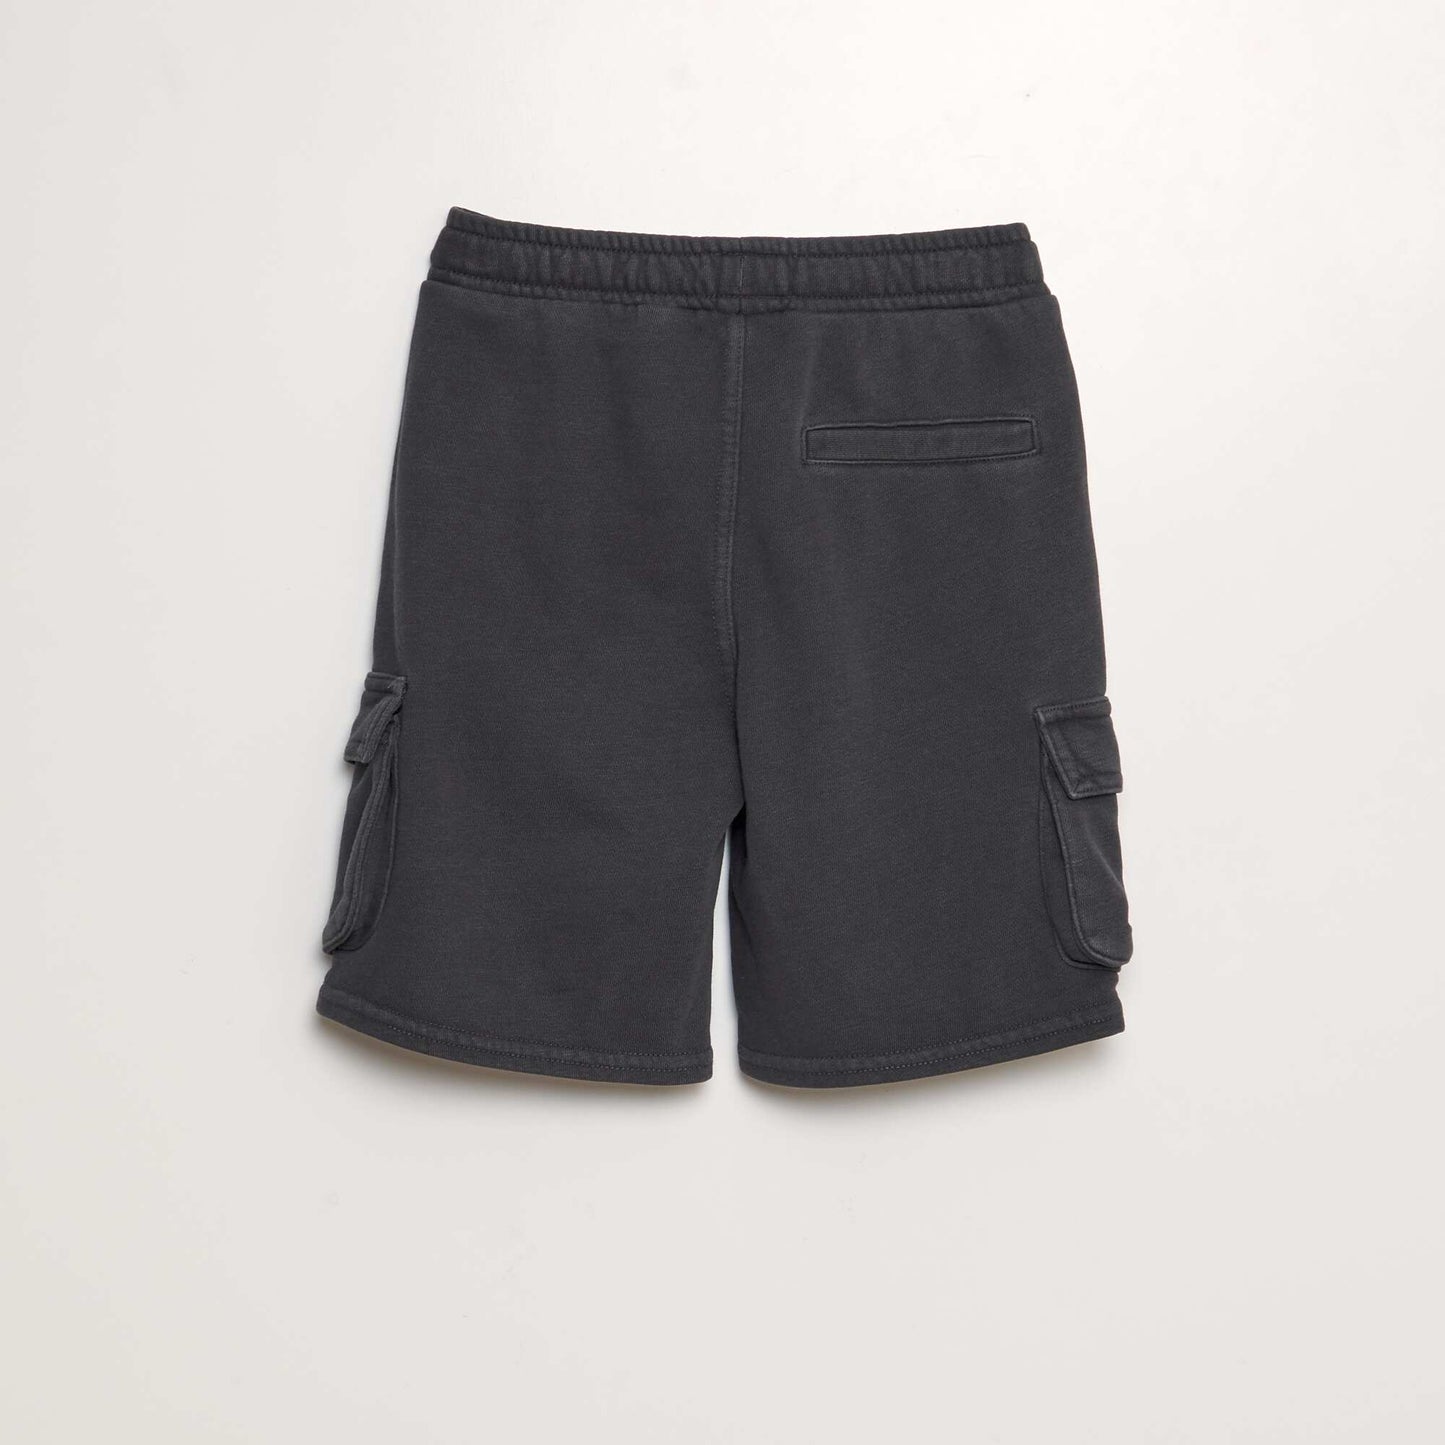 Bermuda shorts with side pockets BLACK